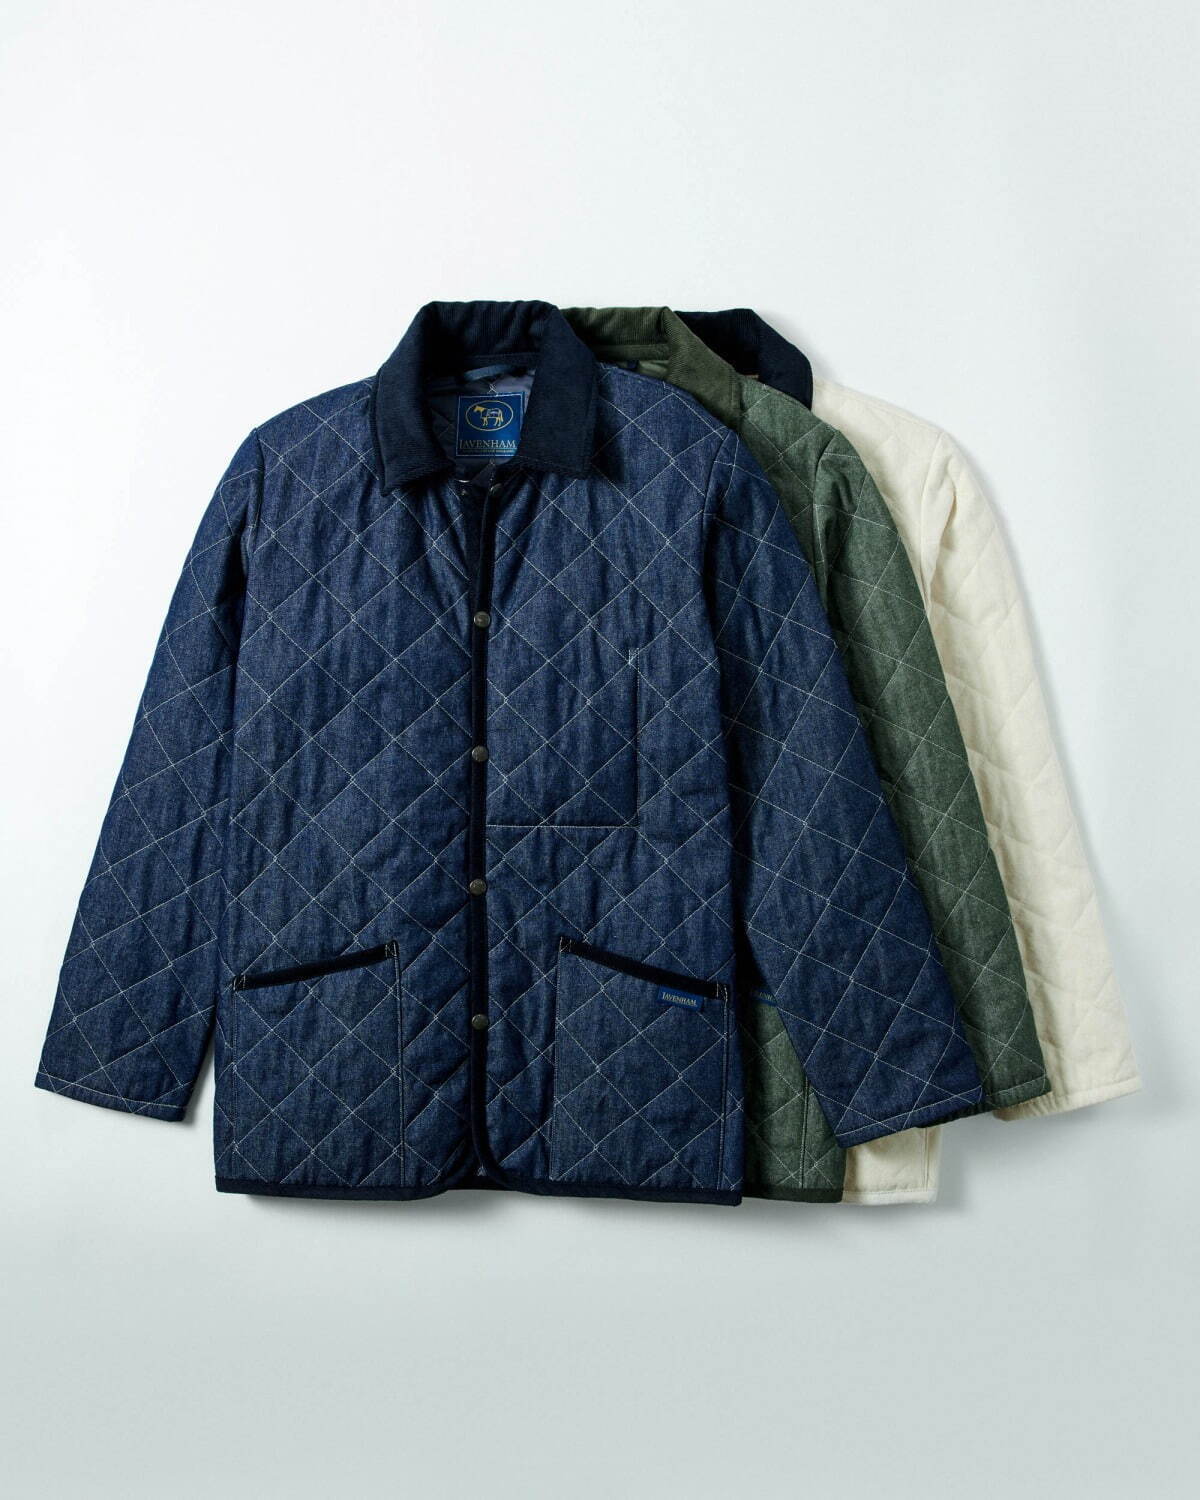 Noah x Lavenham Denhama Jacket 73,700円